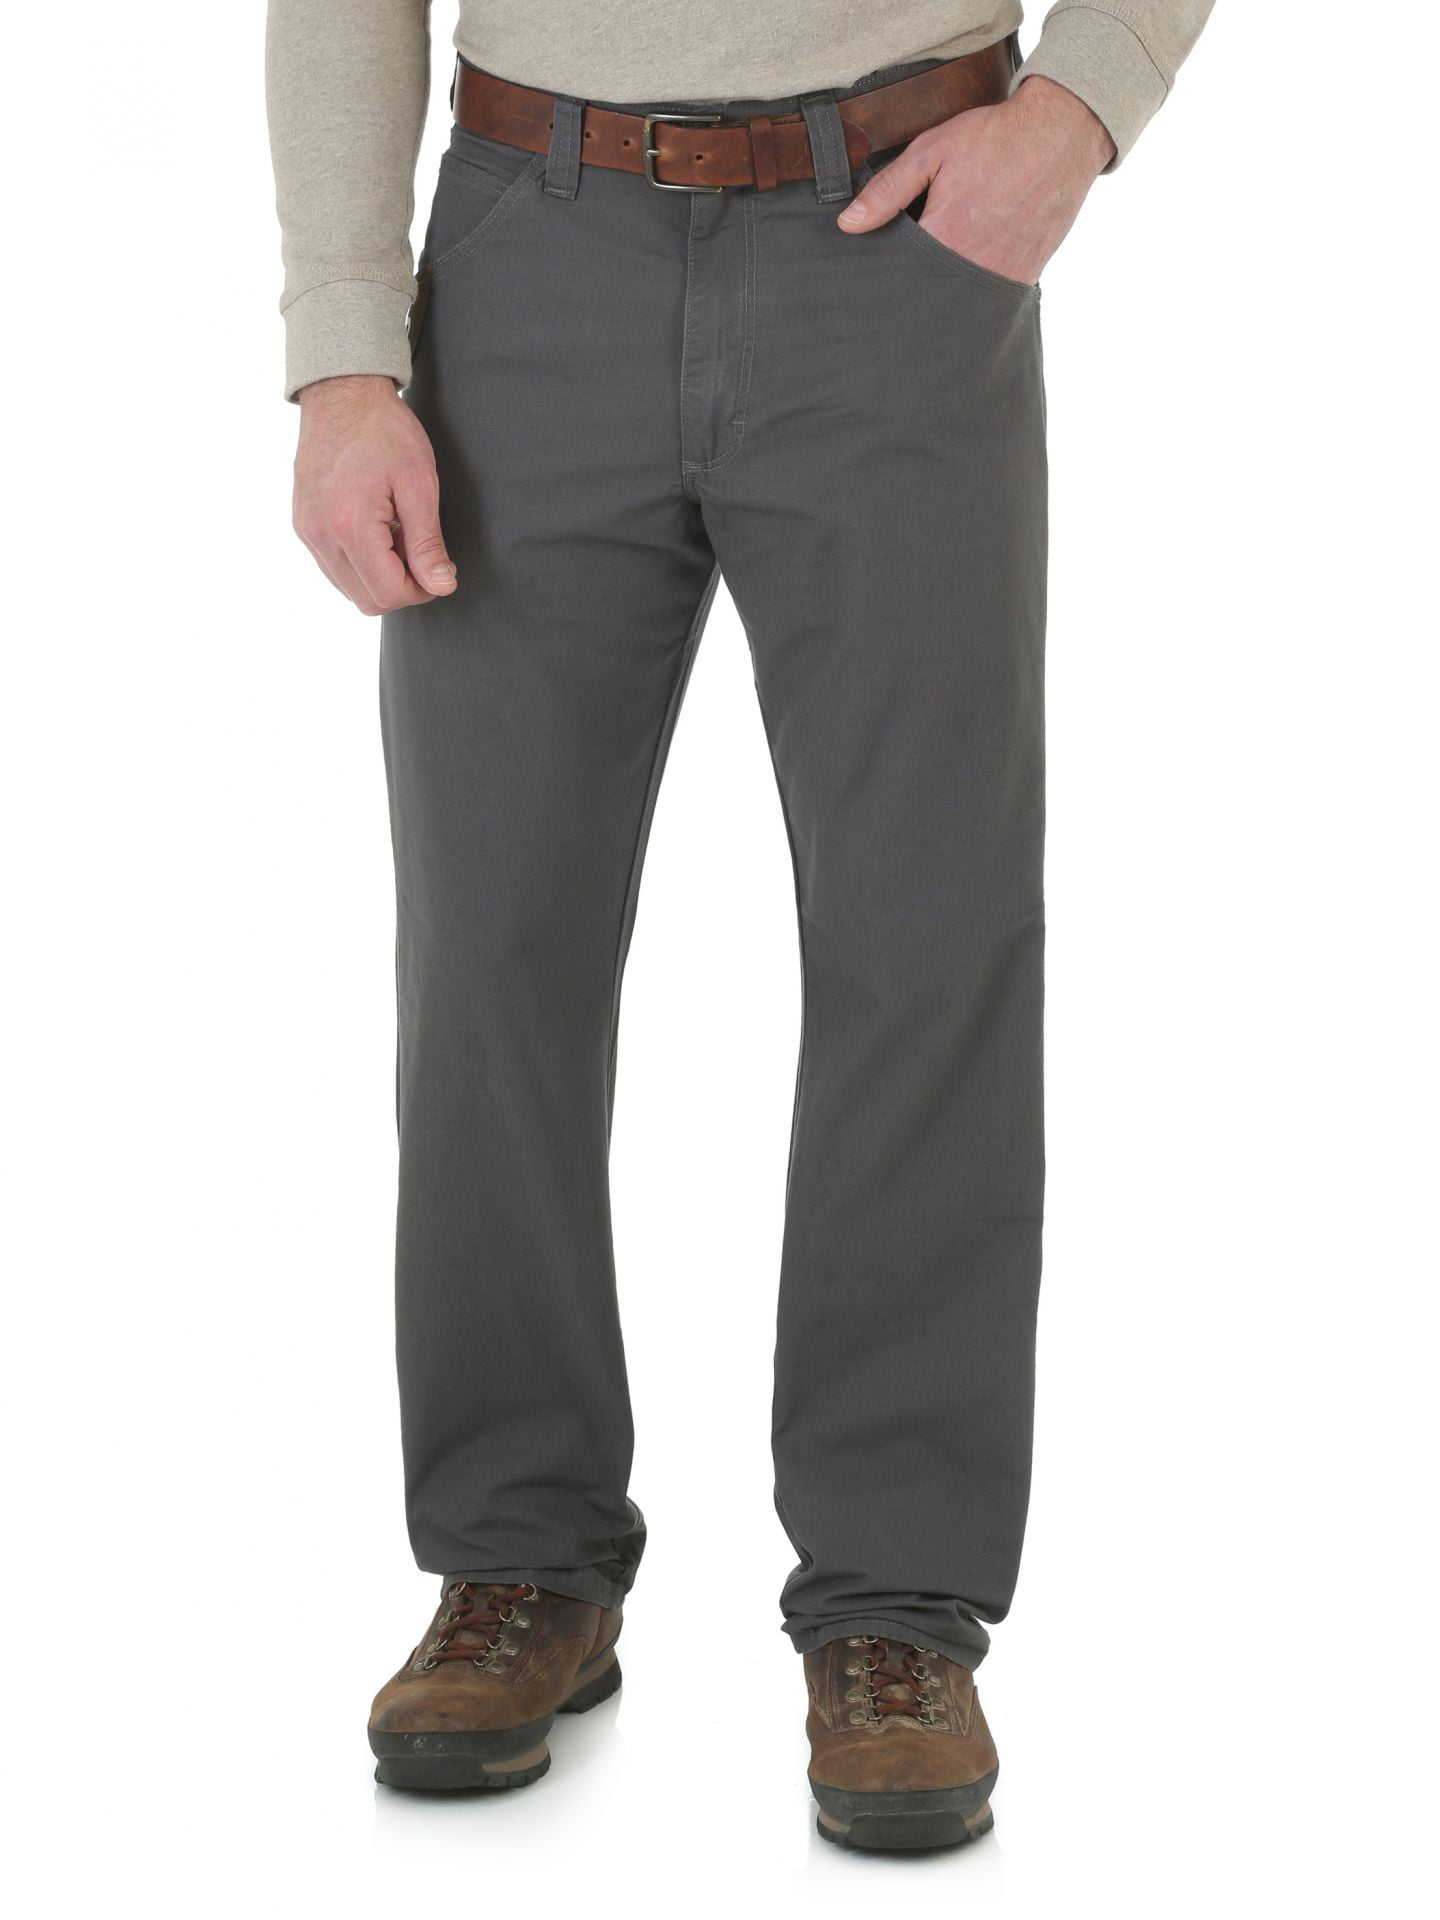 Wrangler Men's RIGGS Workwear Technician Pant- Charcoal,32x30 